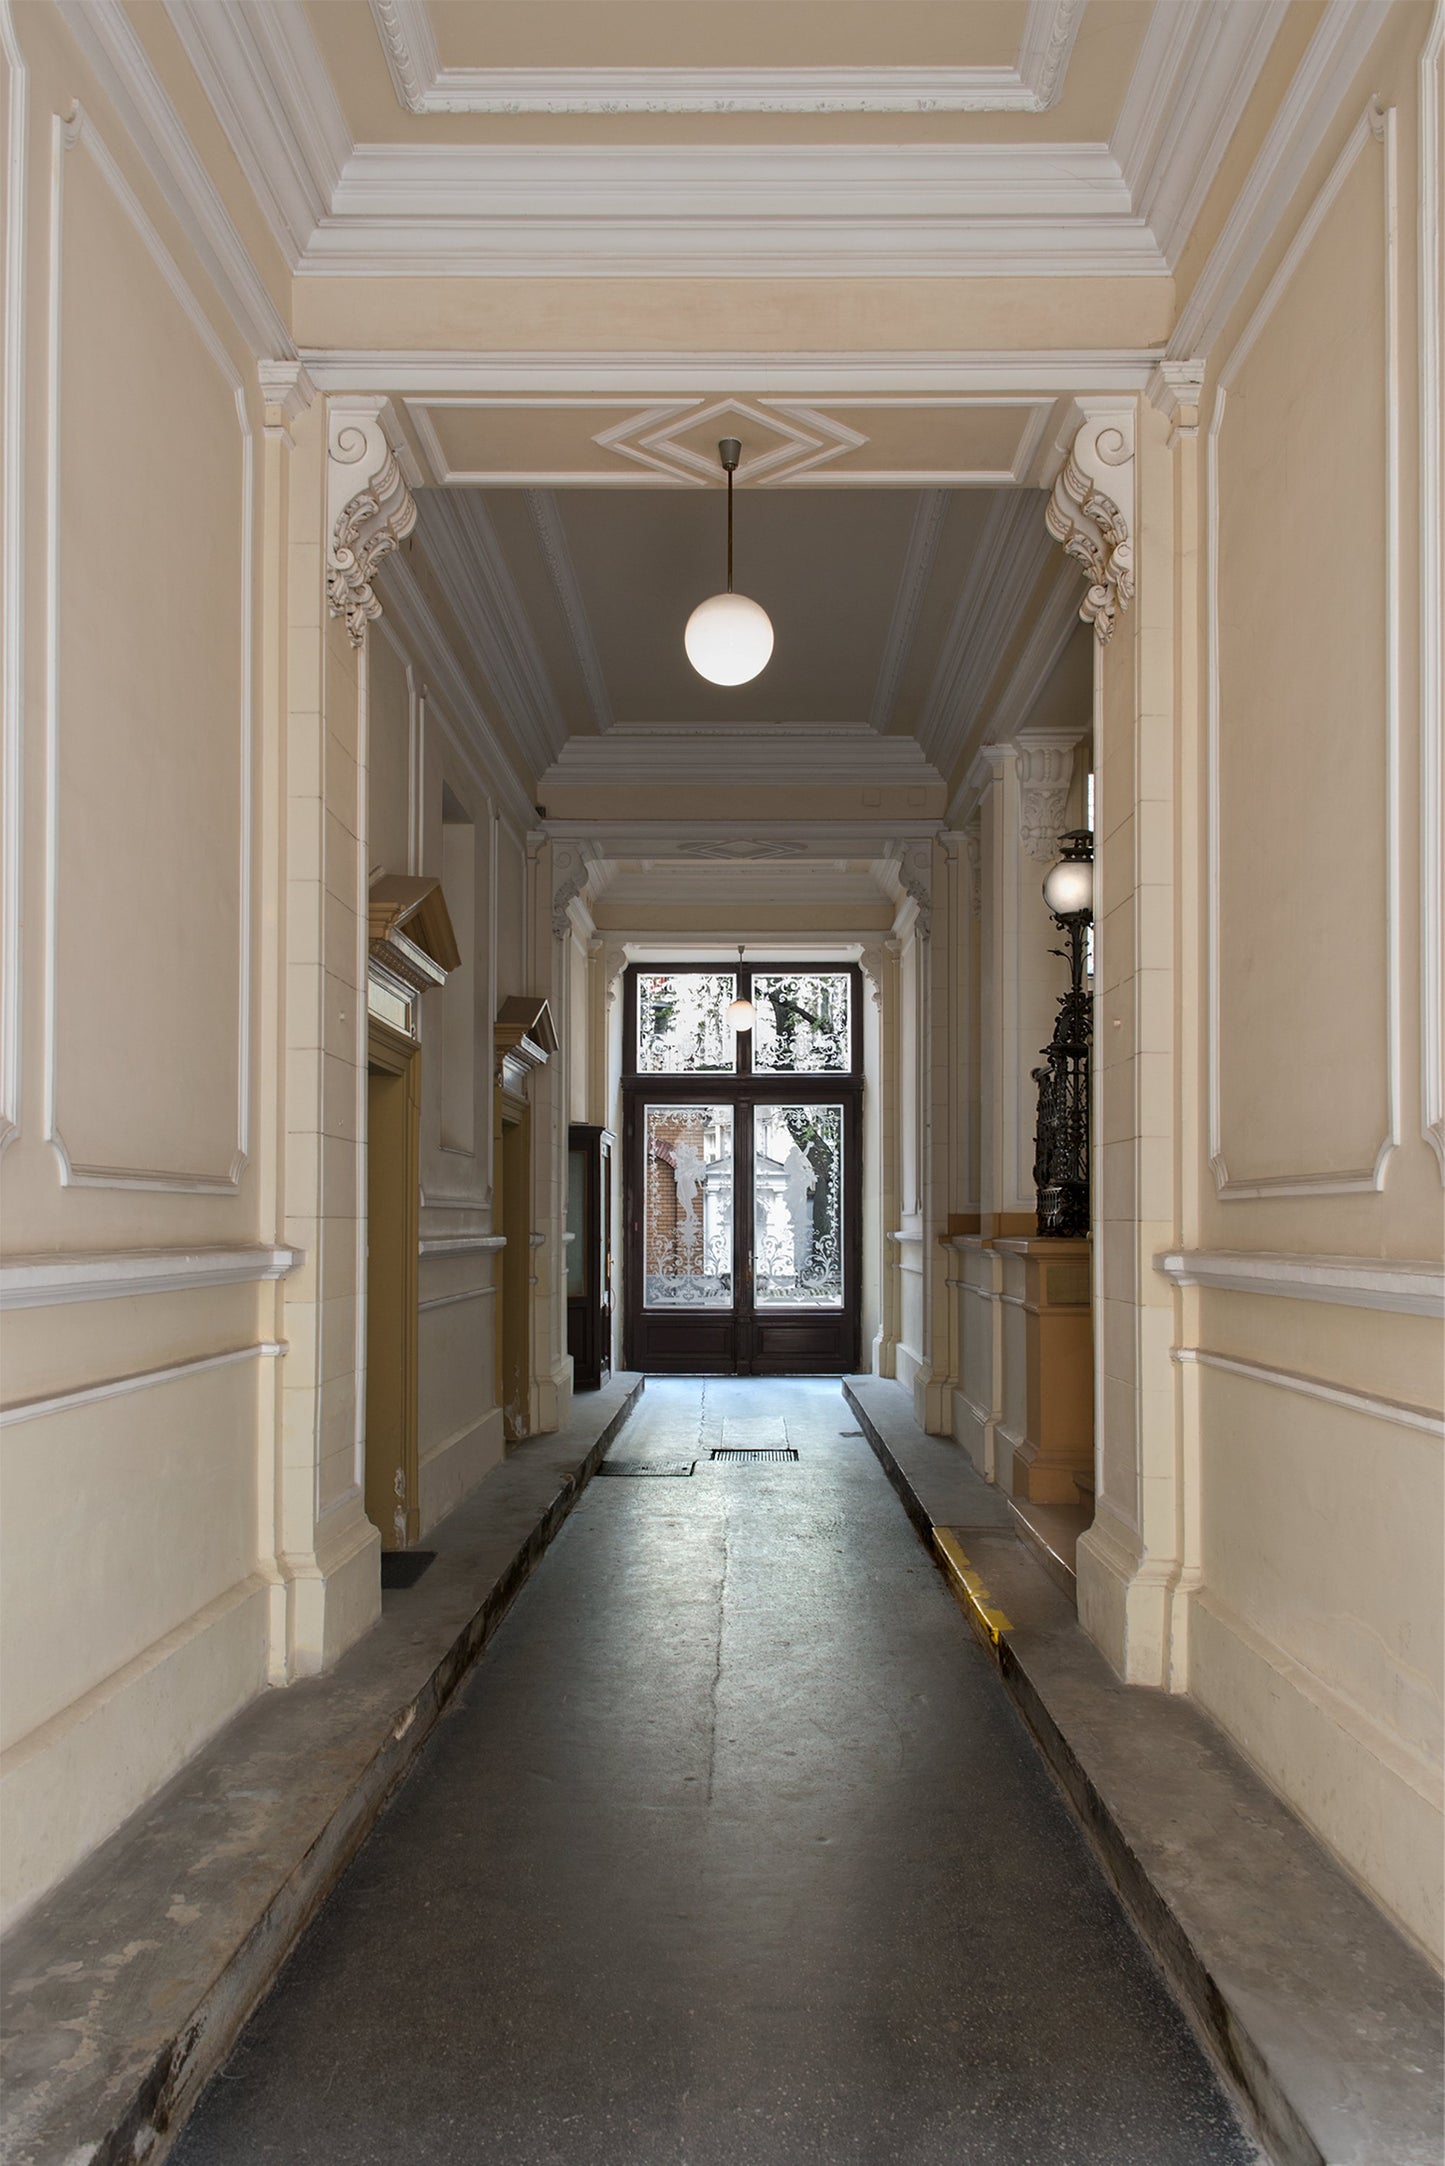 Entrance Passage, Berggasse 19, Vienna